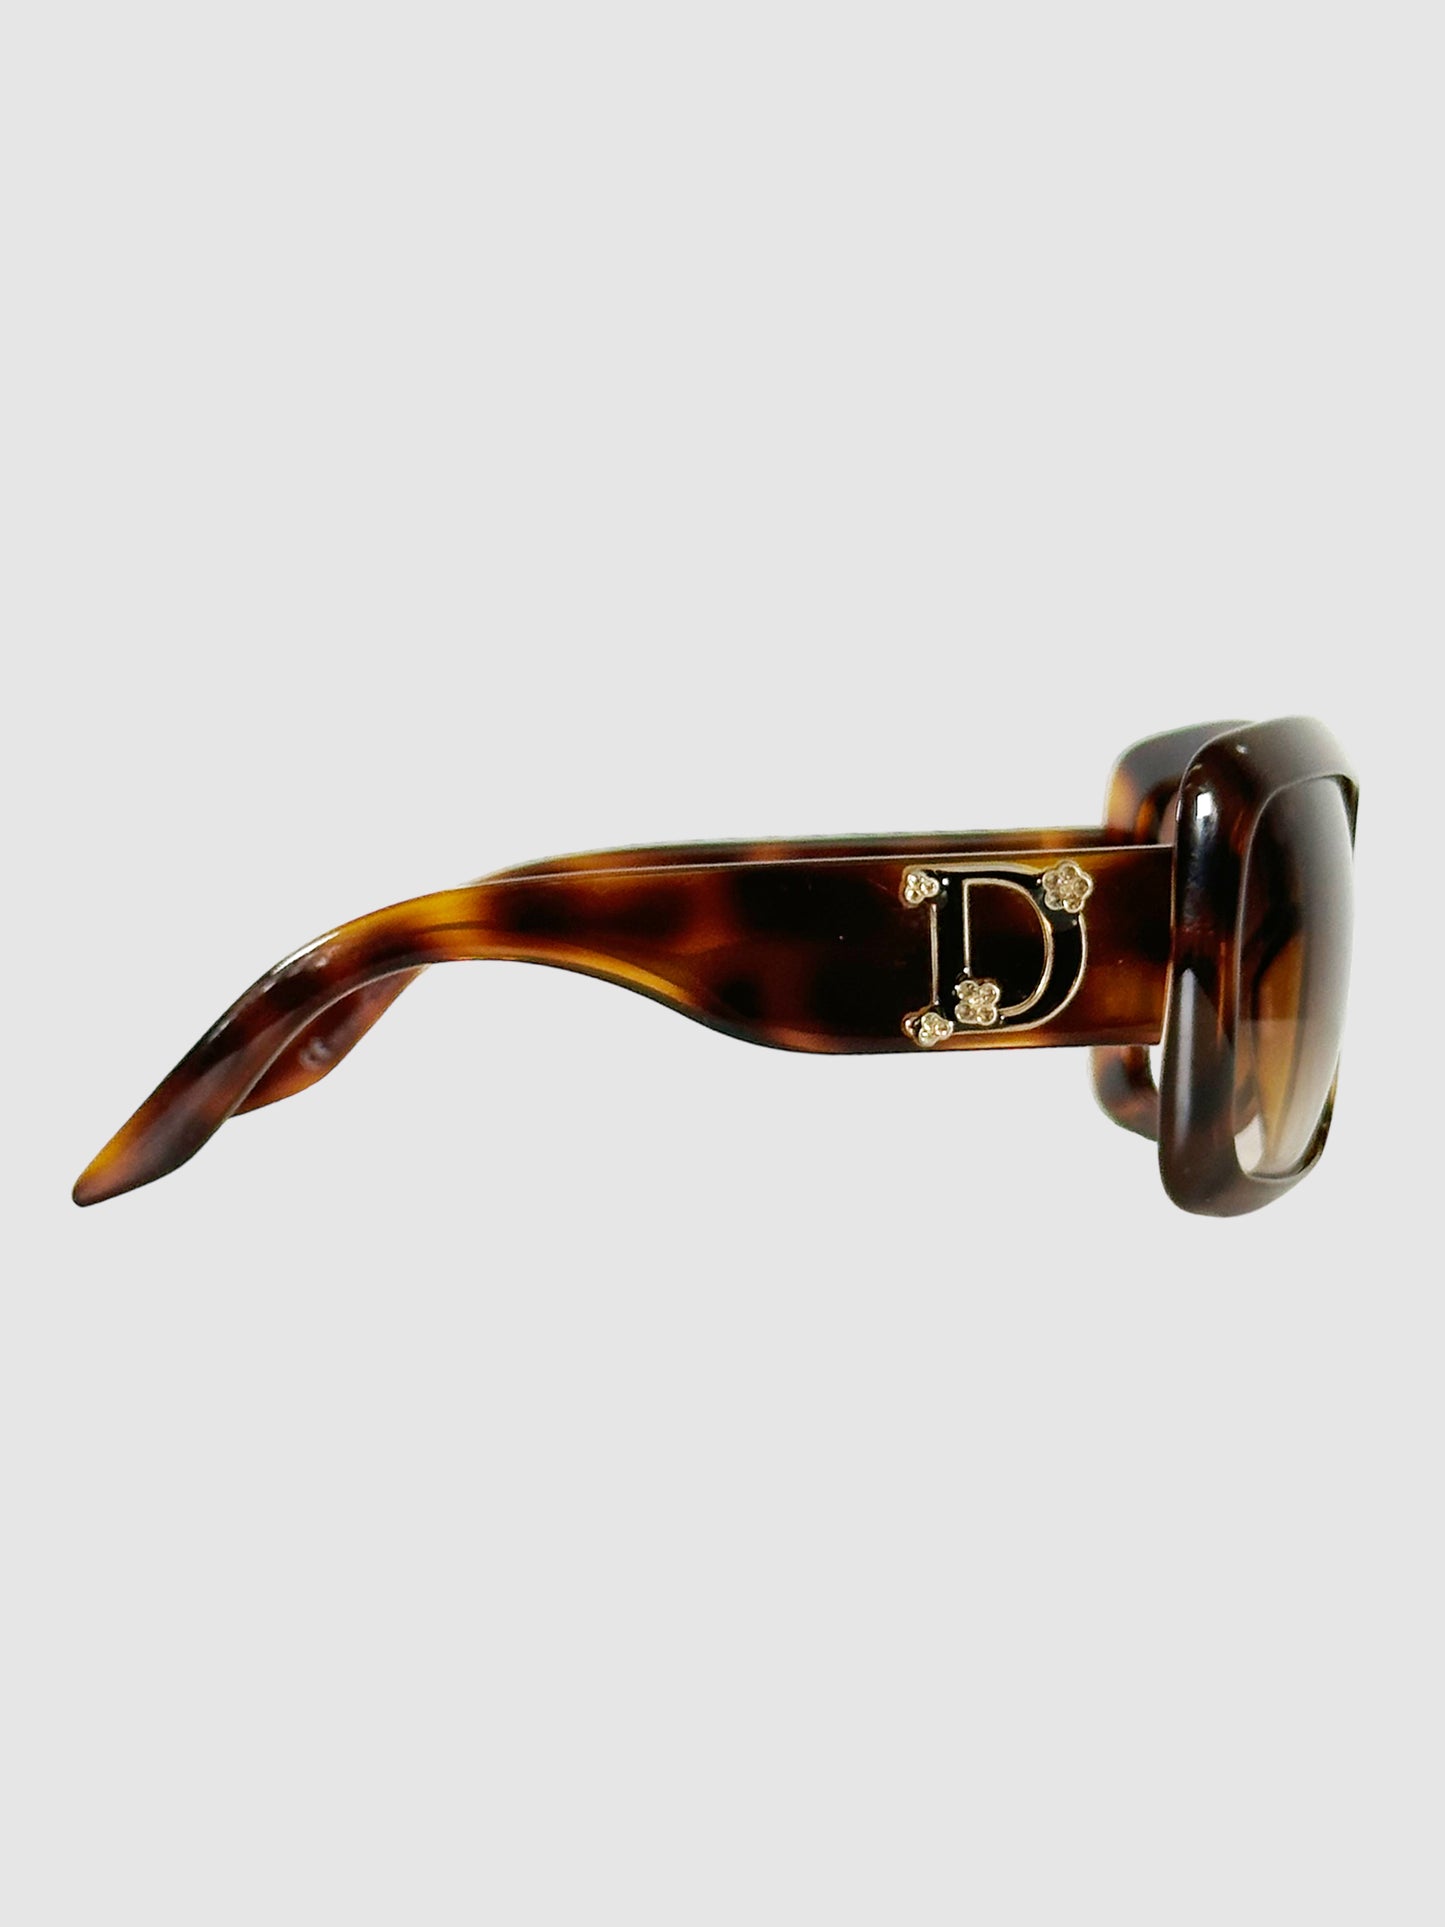 Christian Dior Square Gradient Sunglasses